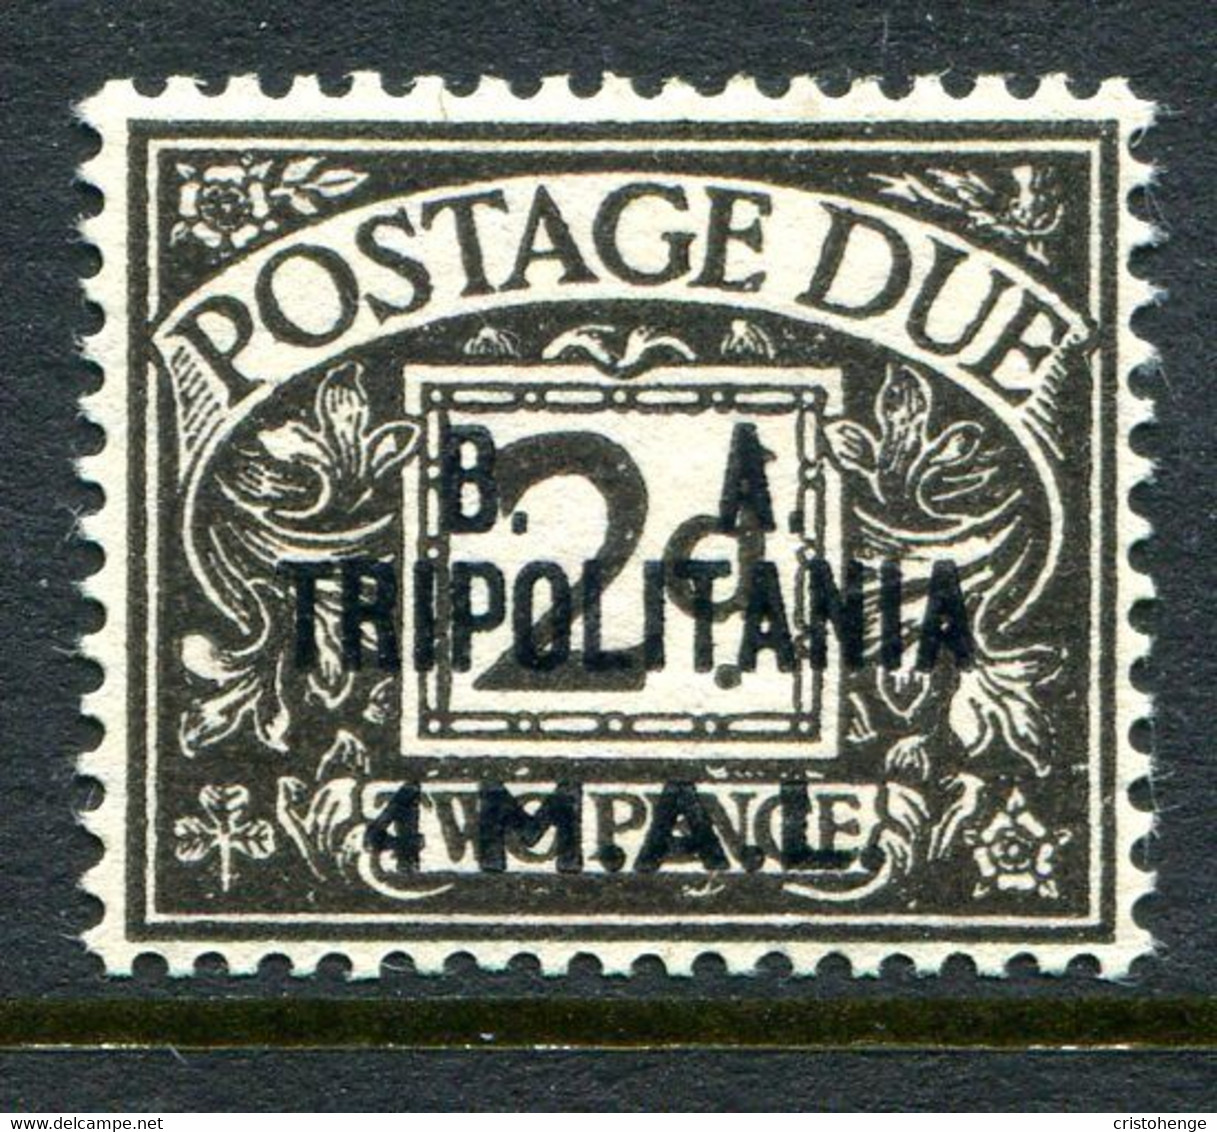 British Occ. Italian Colonies - Tripolitania - 1950 Postage Dues - B.A. - 4l On 2d Agate HM (SG TD8) - Tripolitaine